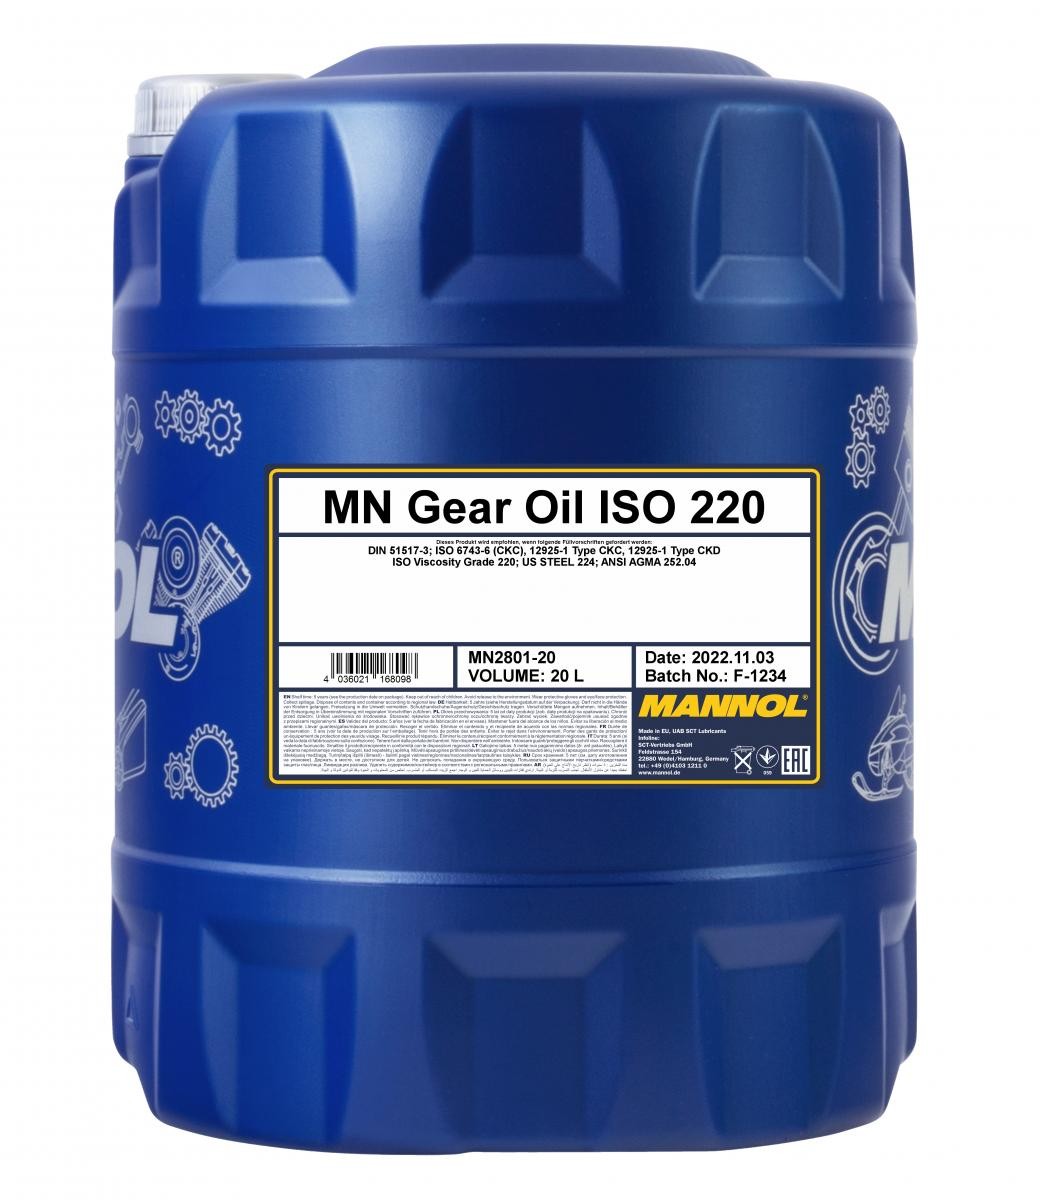 MANNOL Gear Oil ISO 220 Capacity: 20l ISO VG 220, ANSI/AGMA 252.04, US STEEL 224, DIN 51517-3, ISO 12925-1 CKC, ISO 6743-6 (CKC), ISO 12925-1 CKD Transmission oil MN2801-20 buy